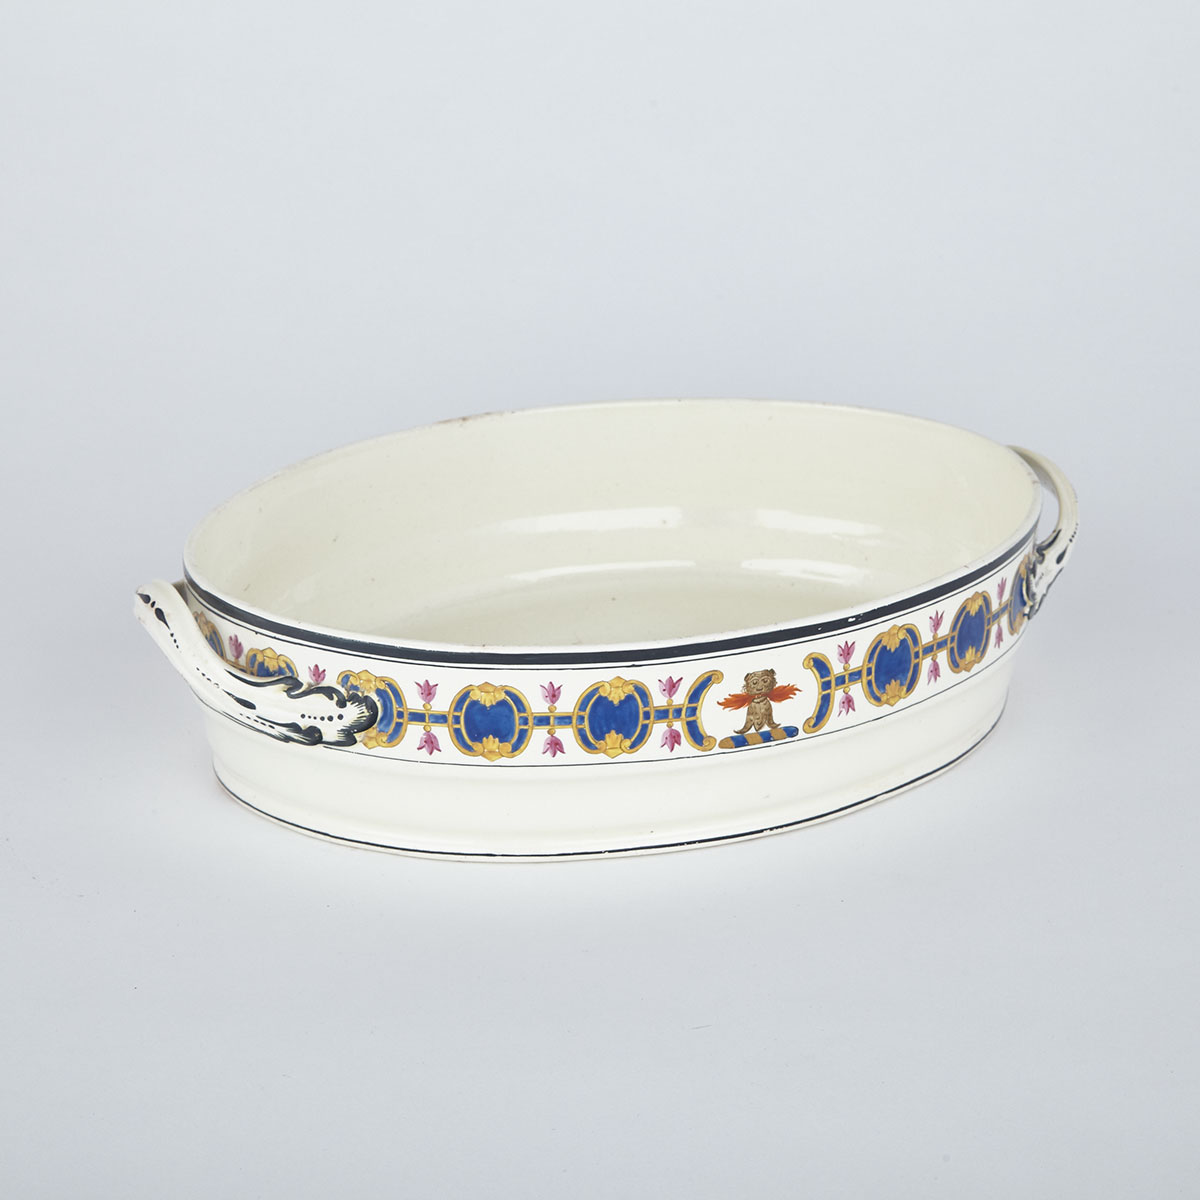 Turner Creamware Armorial Oval Dish, c.1788